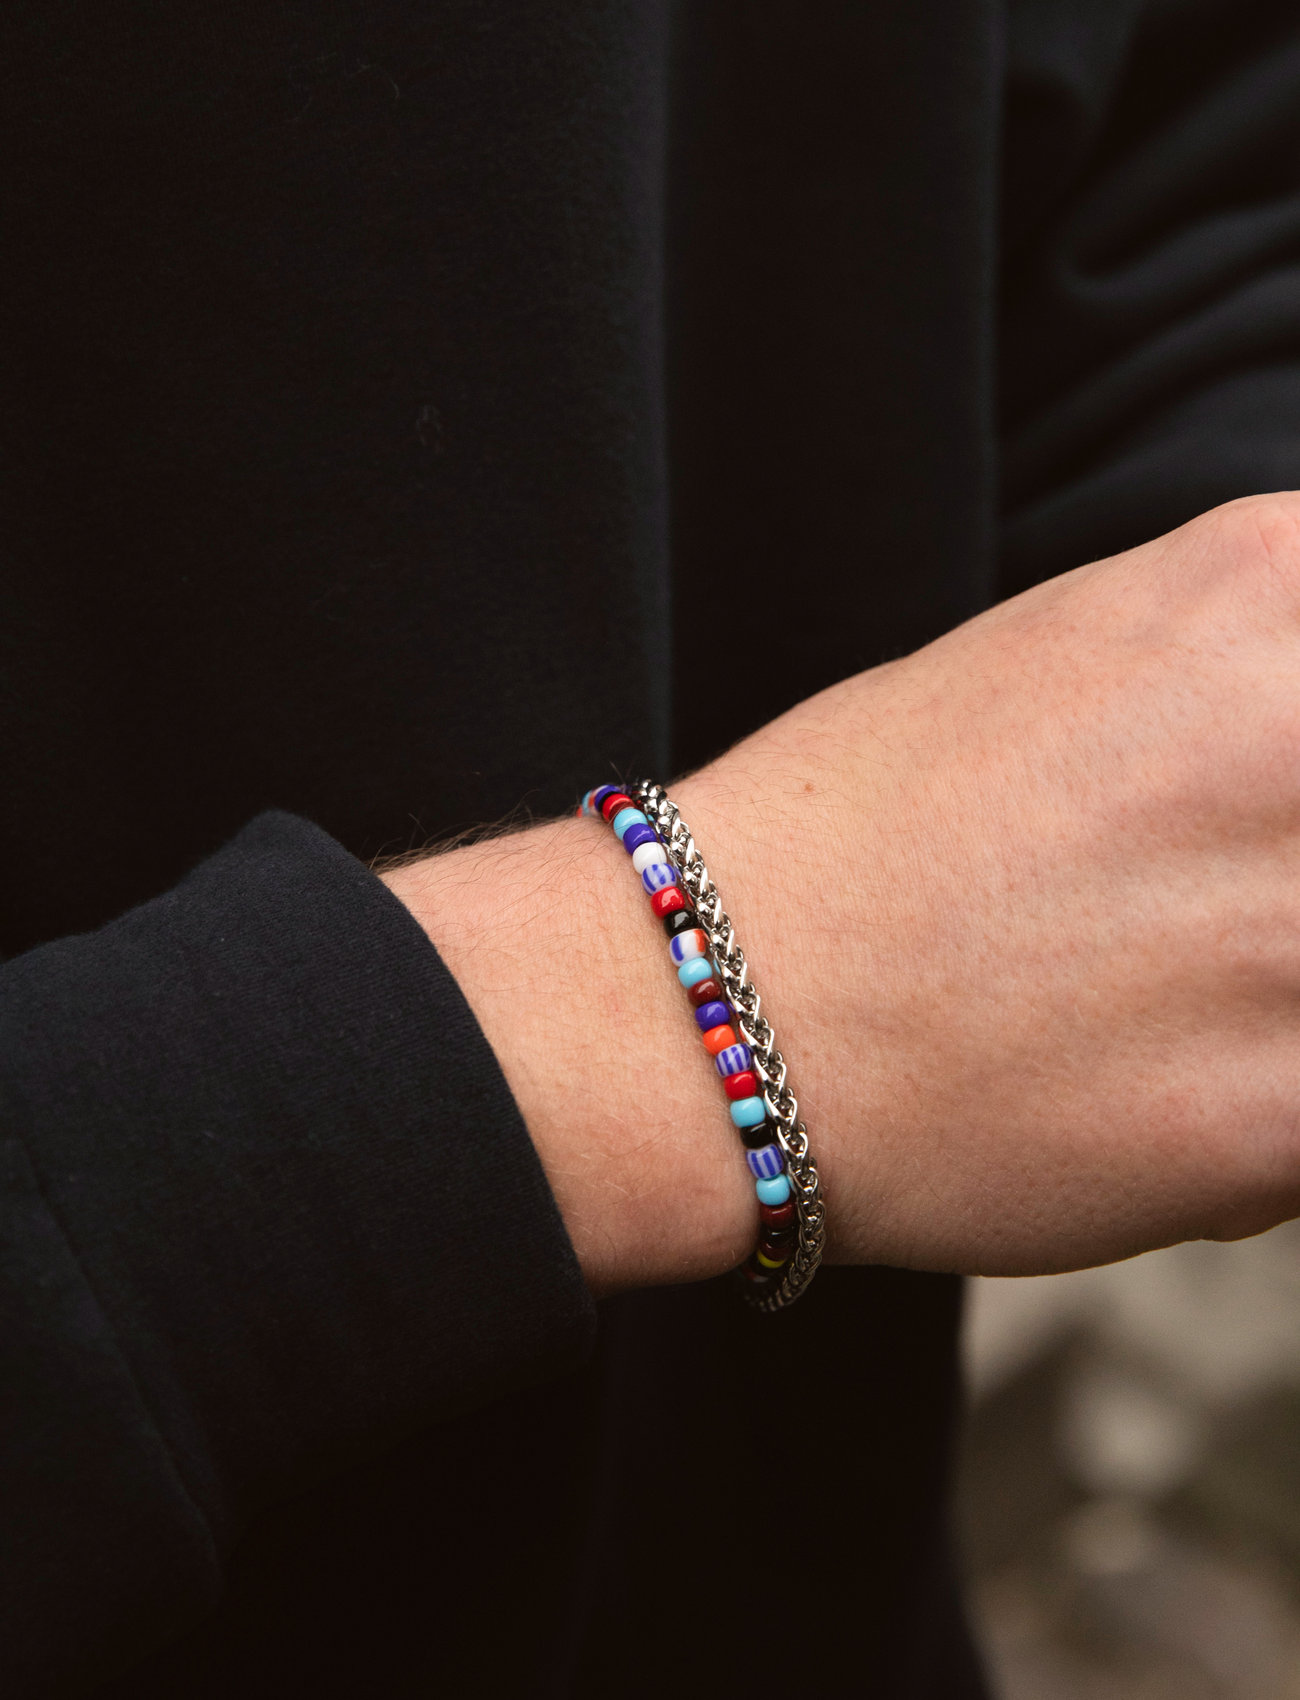 Samie - Samie - Bracelet with colored pearls - perlenarmbänder - sws - 1